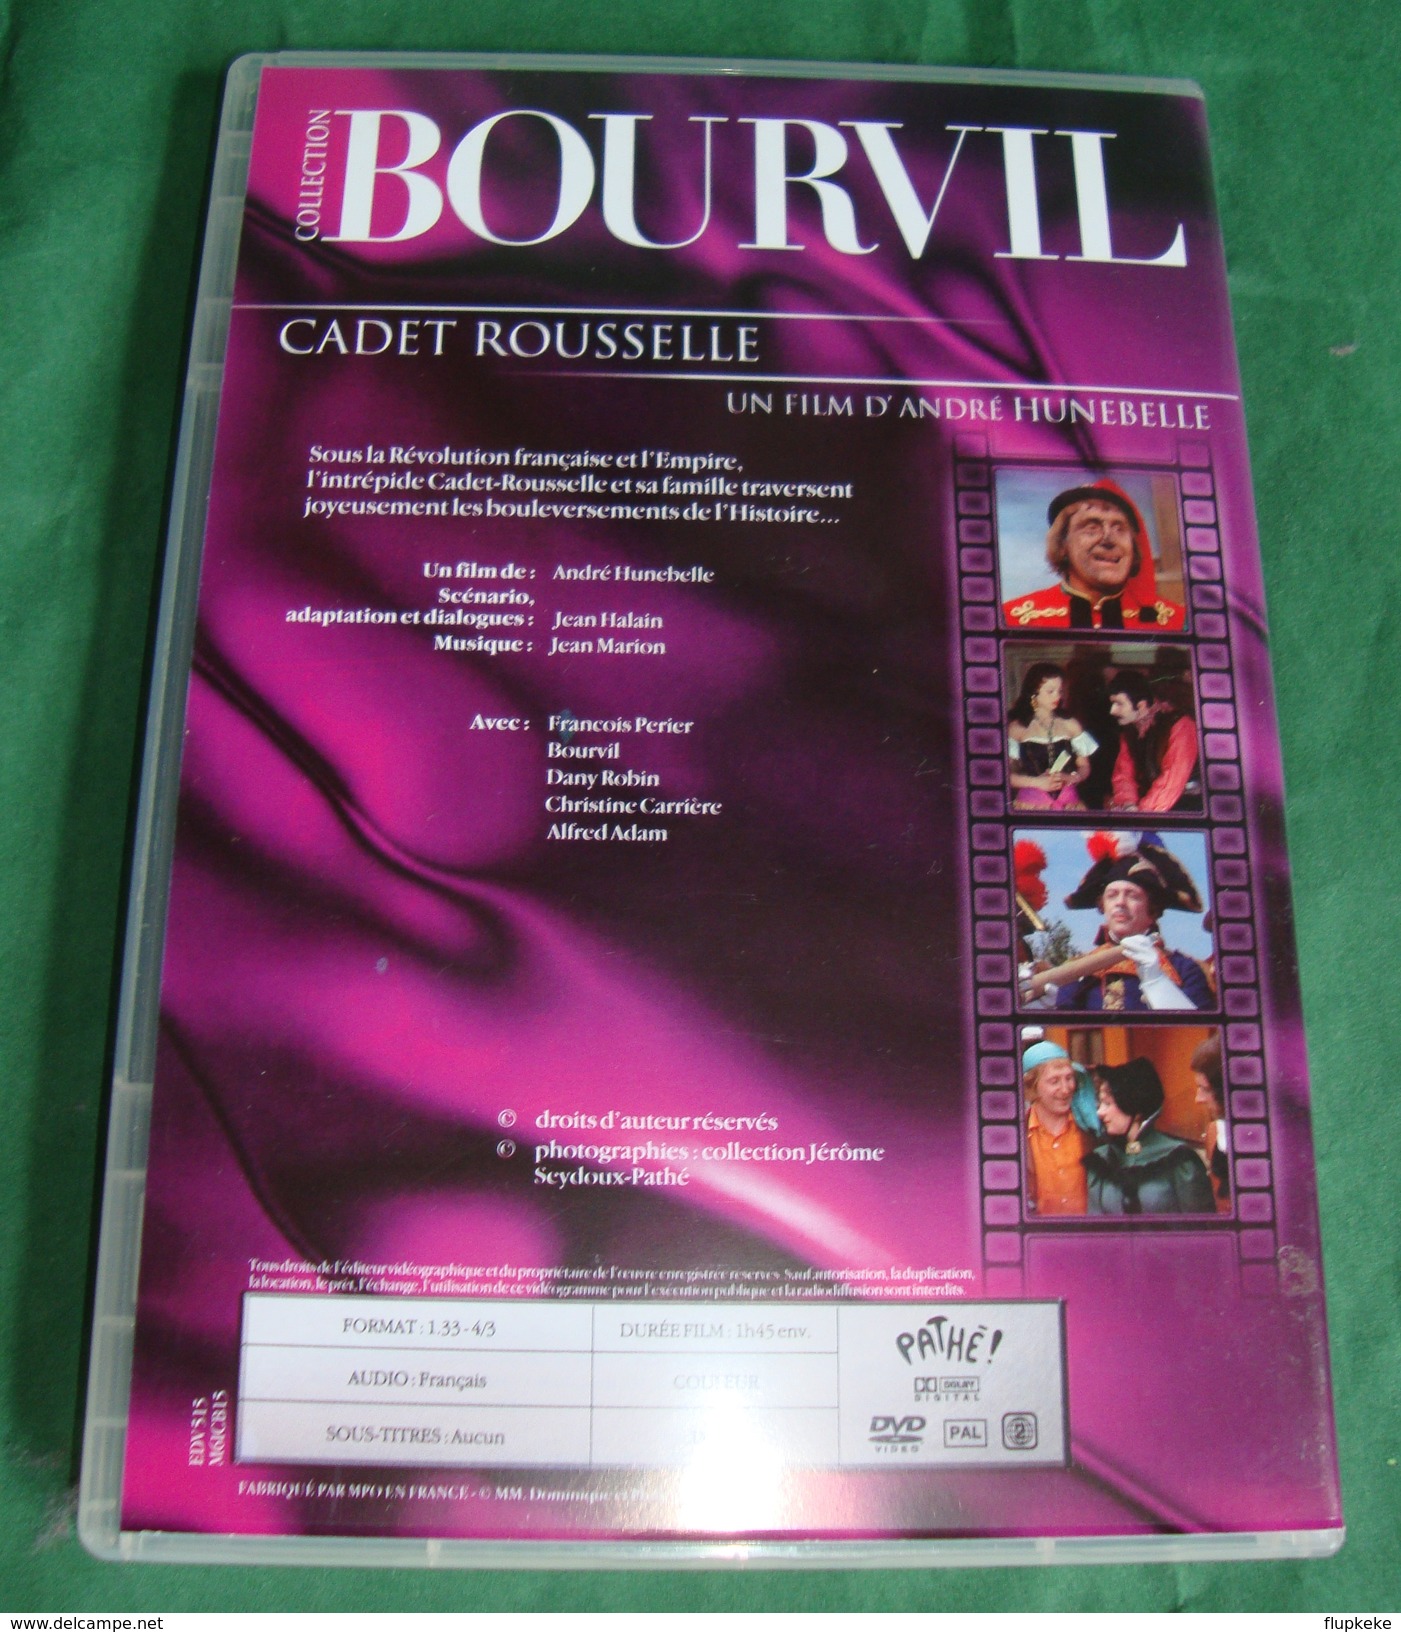 Dvd Zone 2 Cadet Rousselle 1954 Collection Bourvil Vf - Comédie